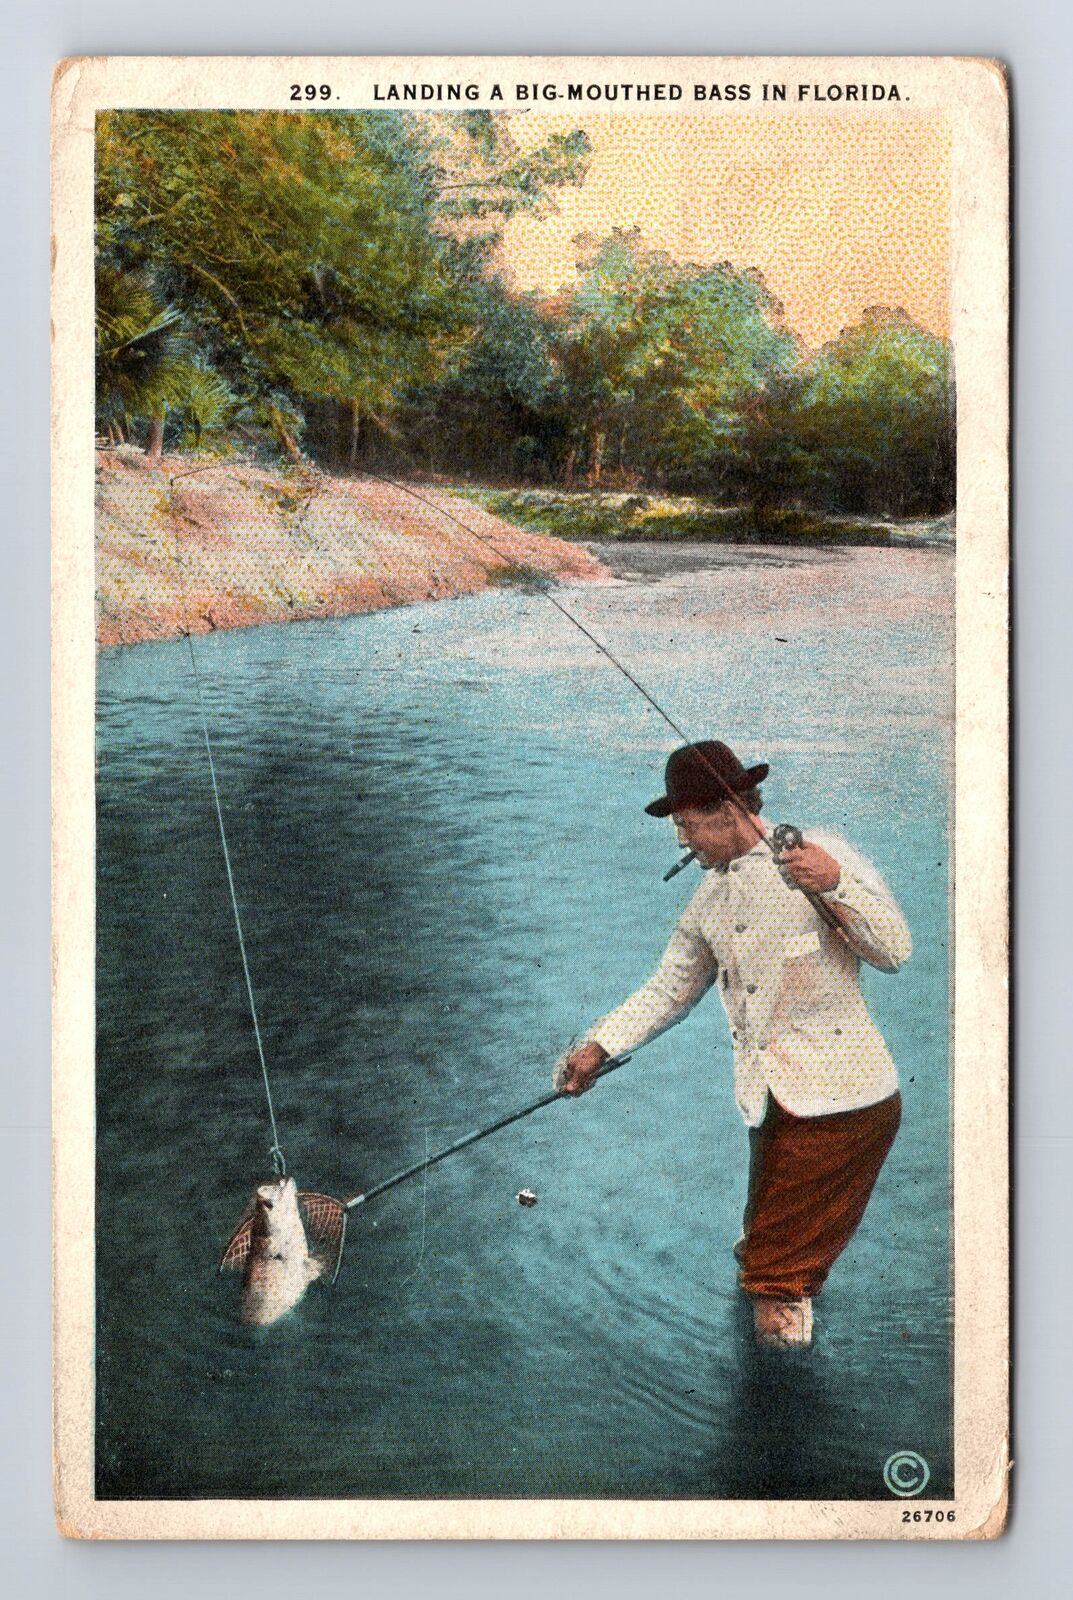 FL-Florida, Fishing in River and Landing a Big Fish, Antique Vintage Postcard